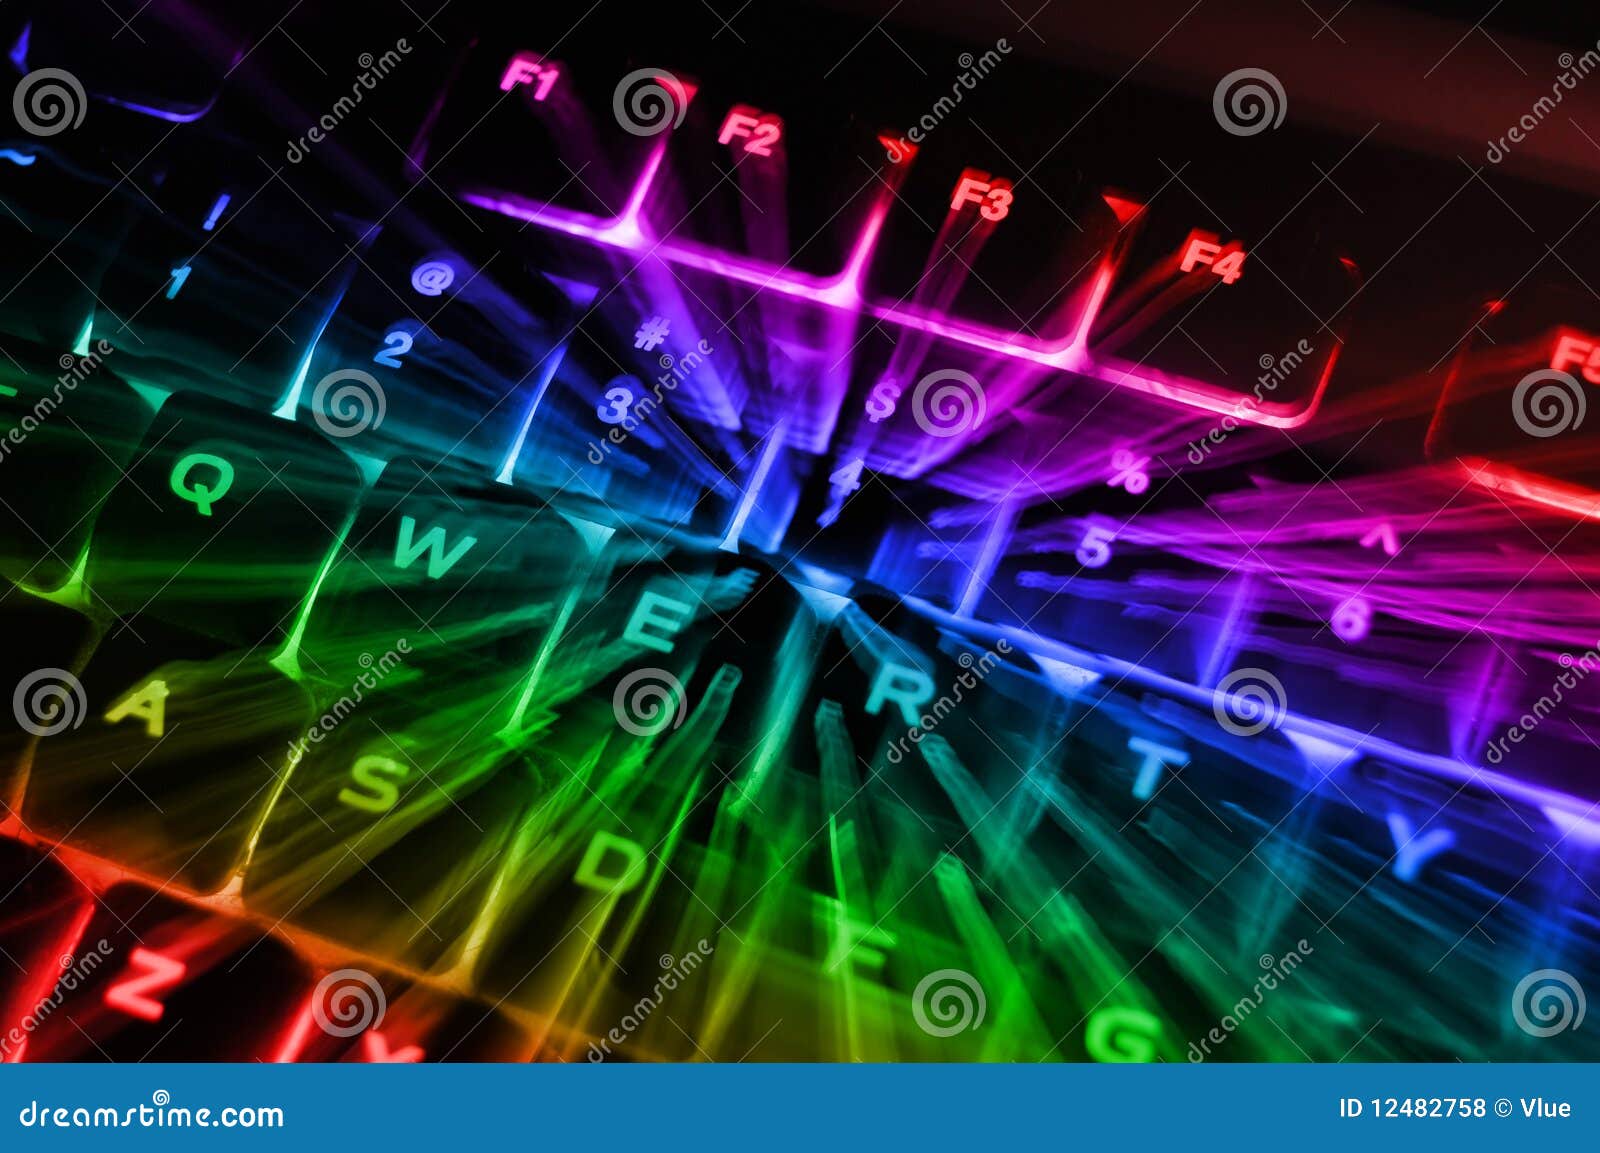 rainbow backlit keyboard